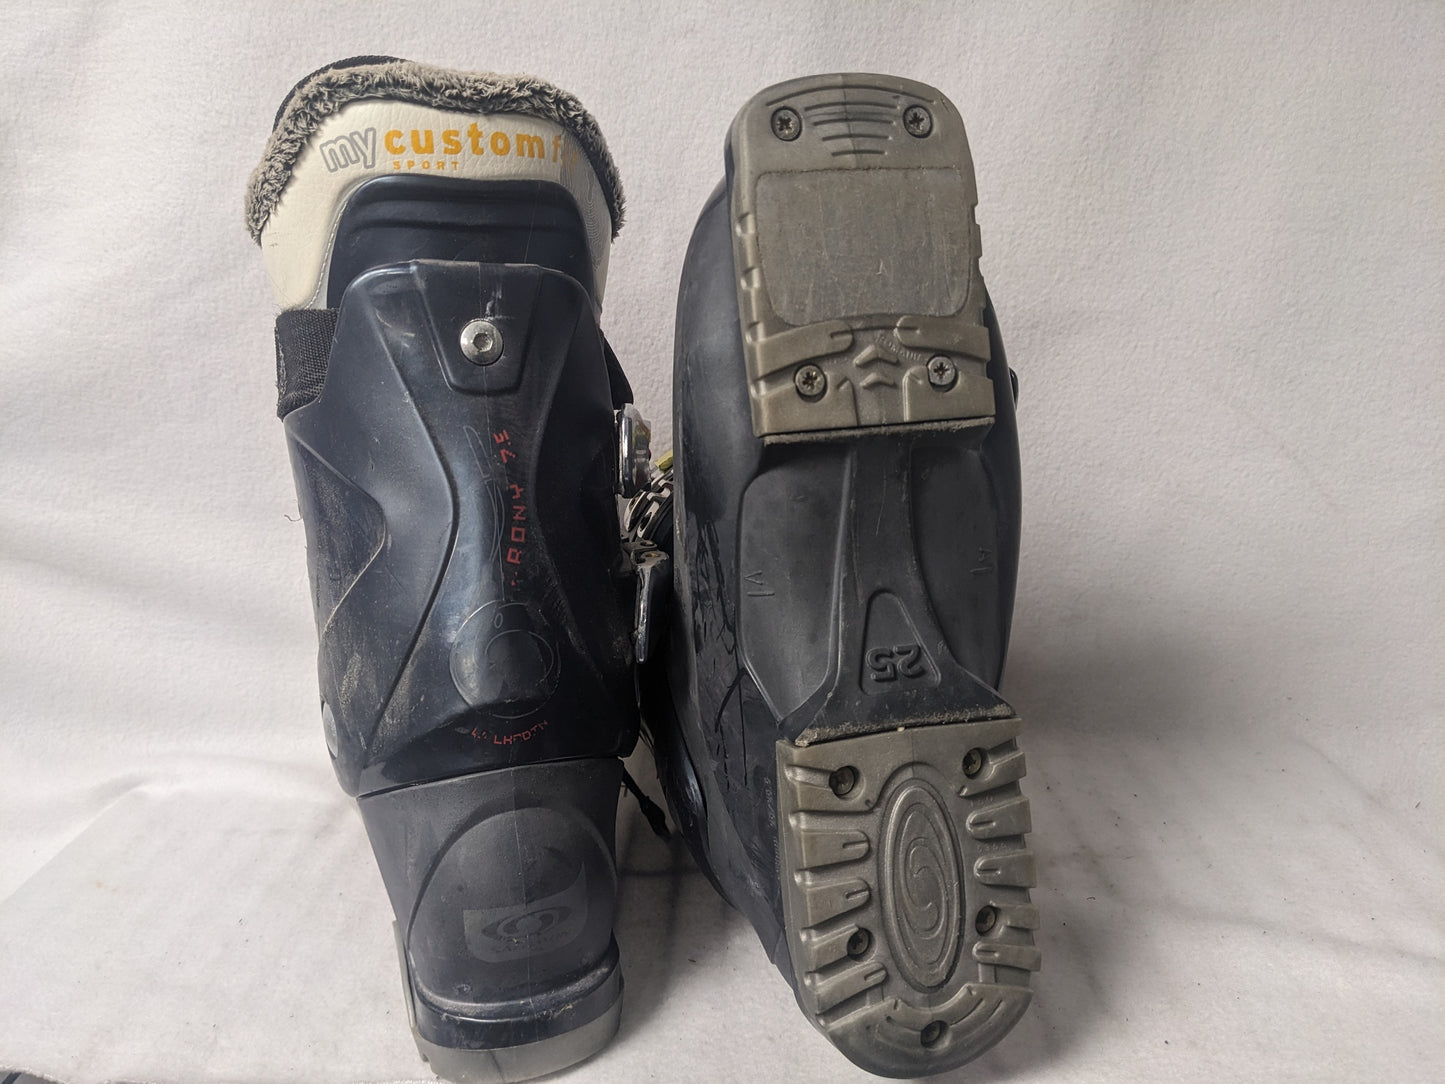 Salomon Irony 7.5 Women's Ski Boots Size 25 Color Gray Condition Used